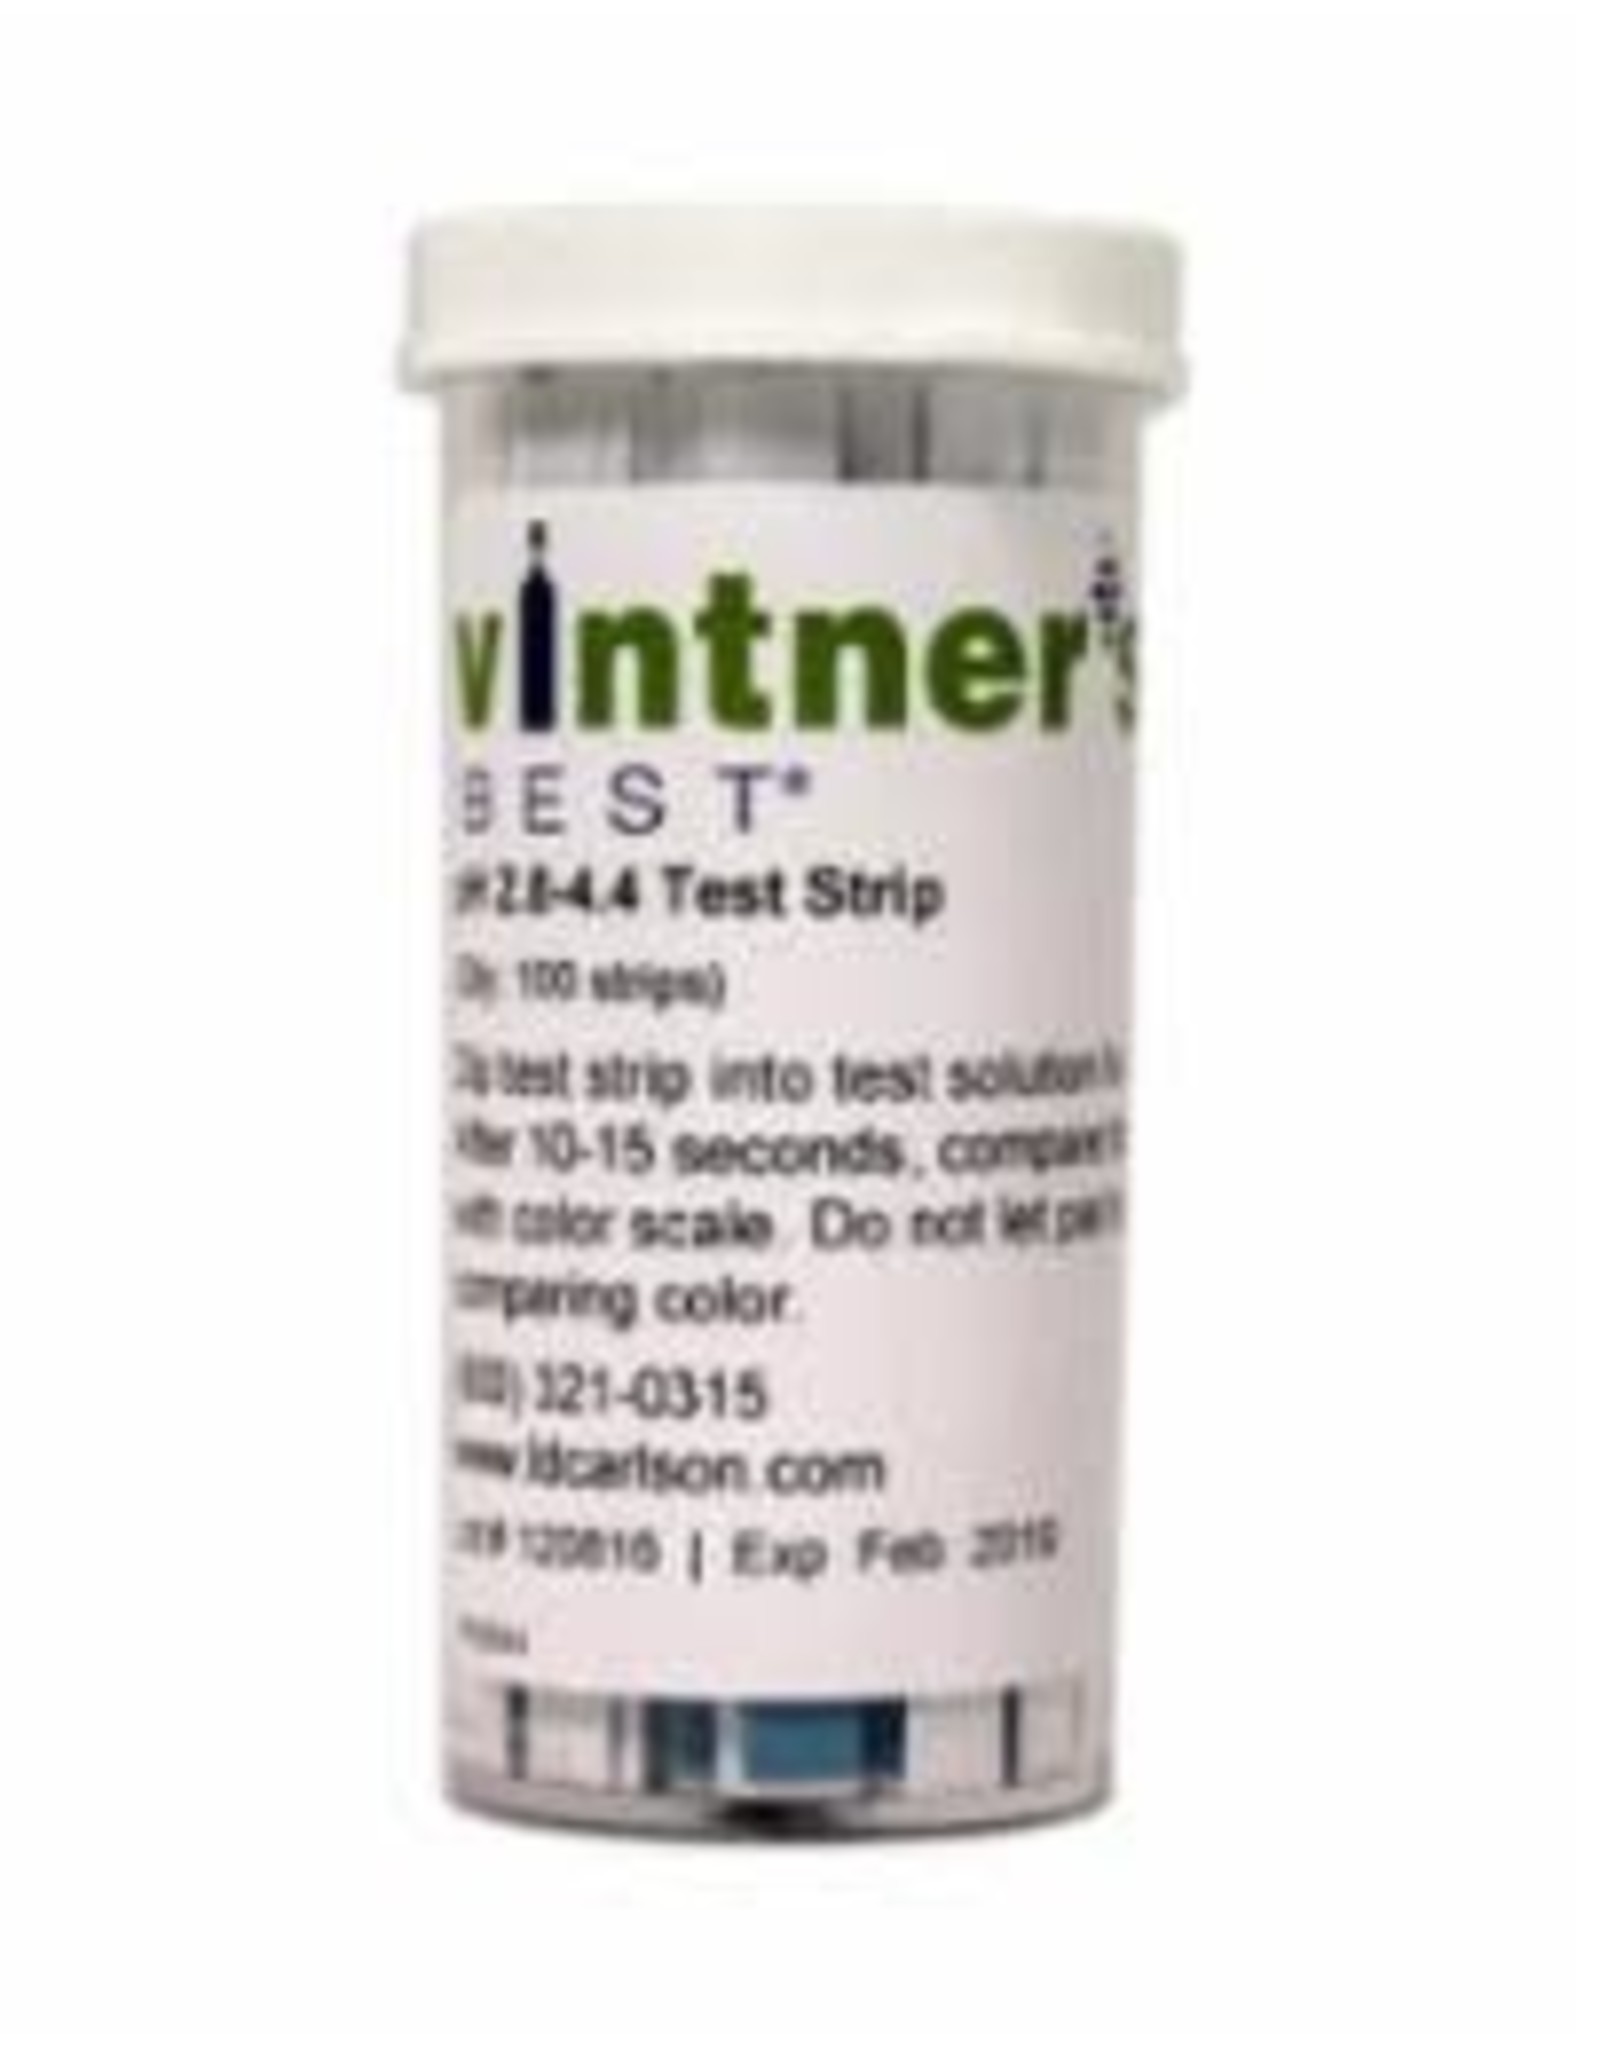 Vintners Best pH paper Test Strip pH 2.8 to 4.4